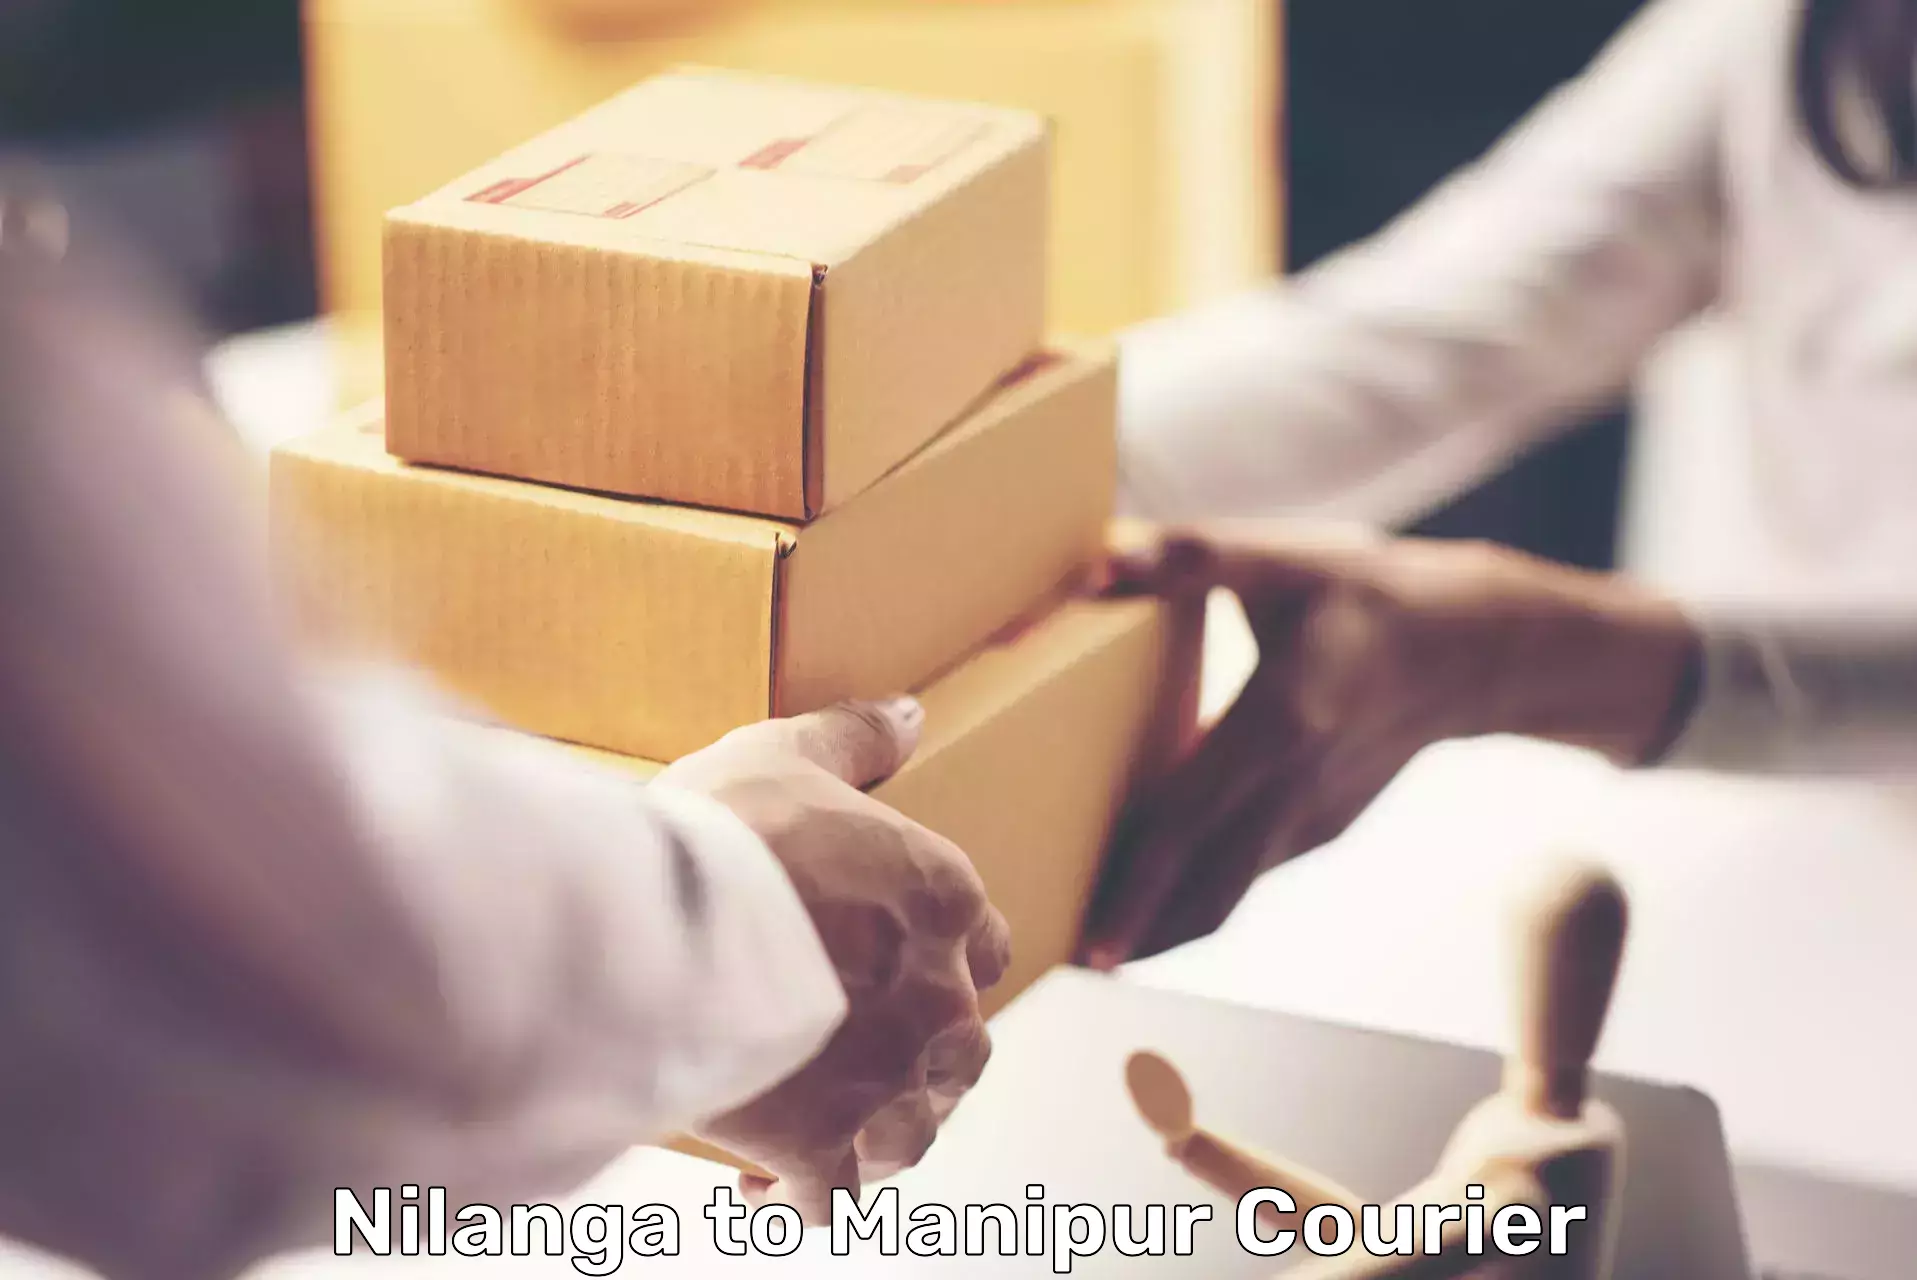 Delivery service partnership Nilanga to Manipur